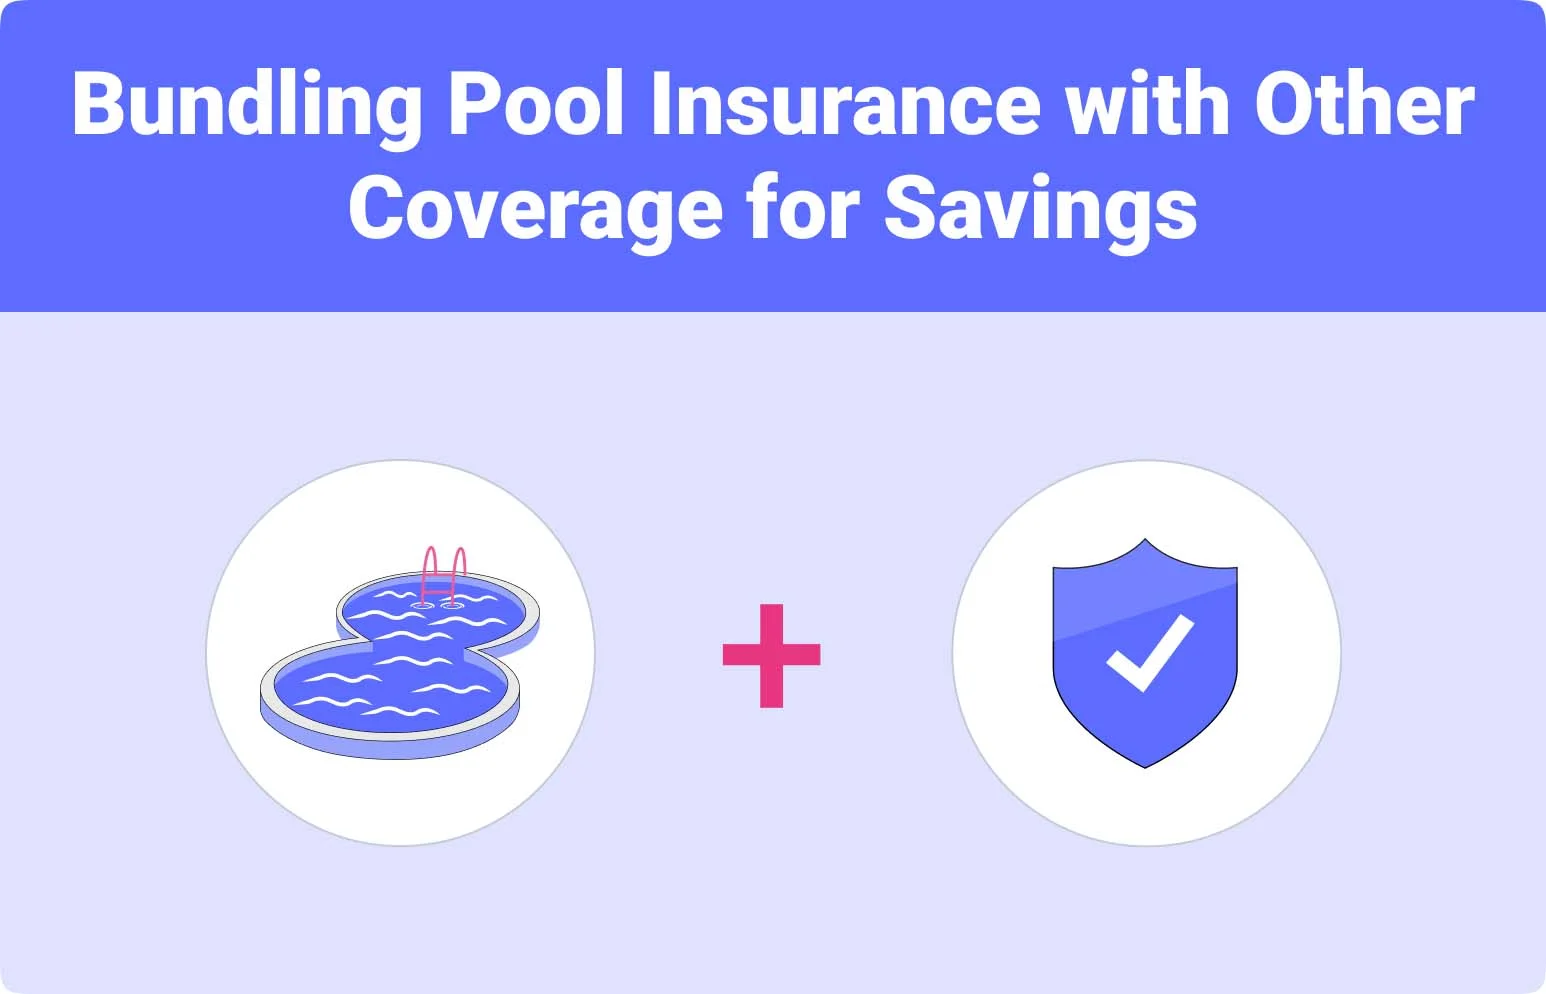 Bundling pool insurance with other savings